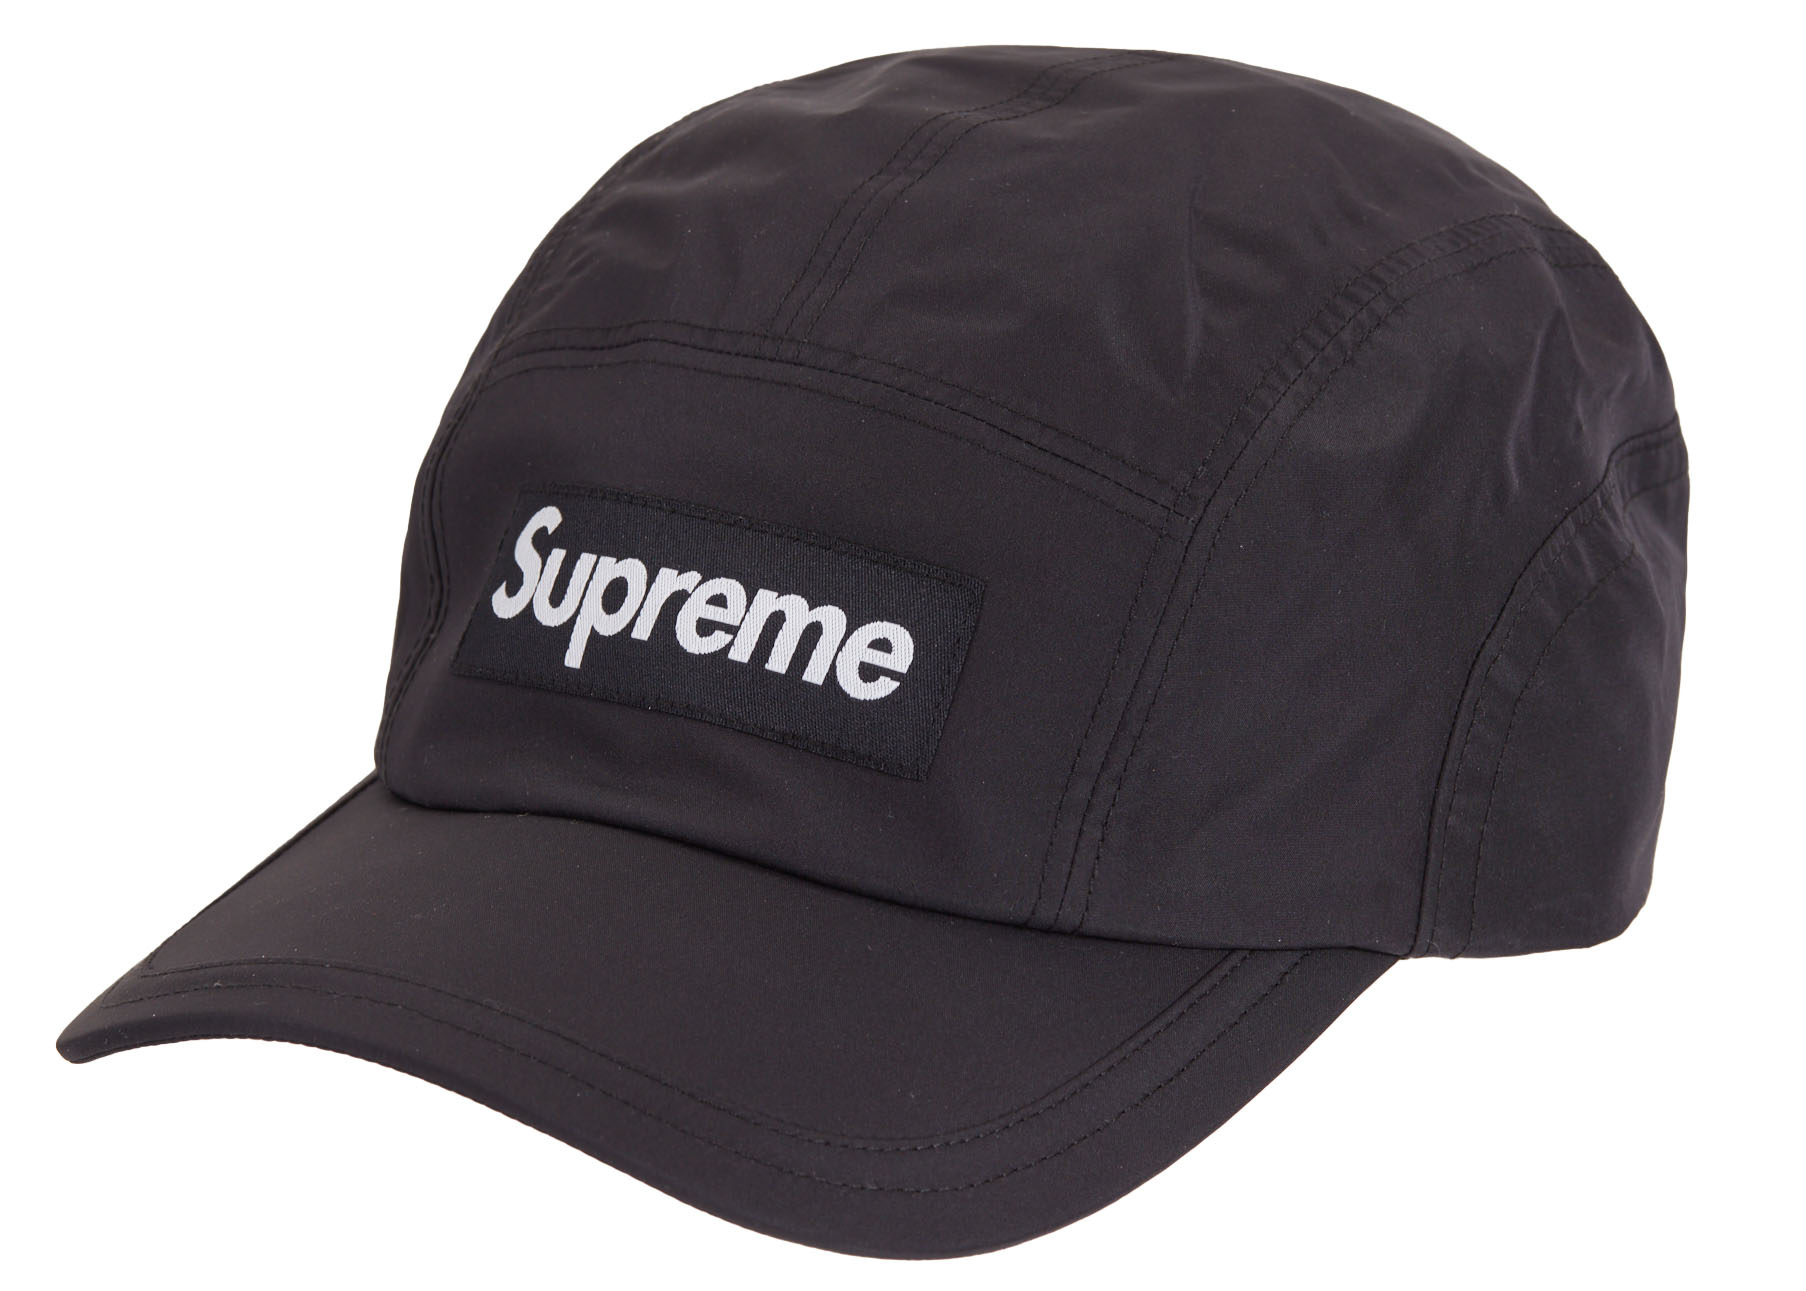 supreme GORE-TEX camp cap